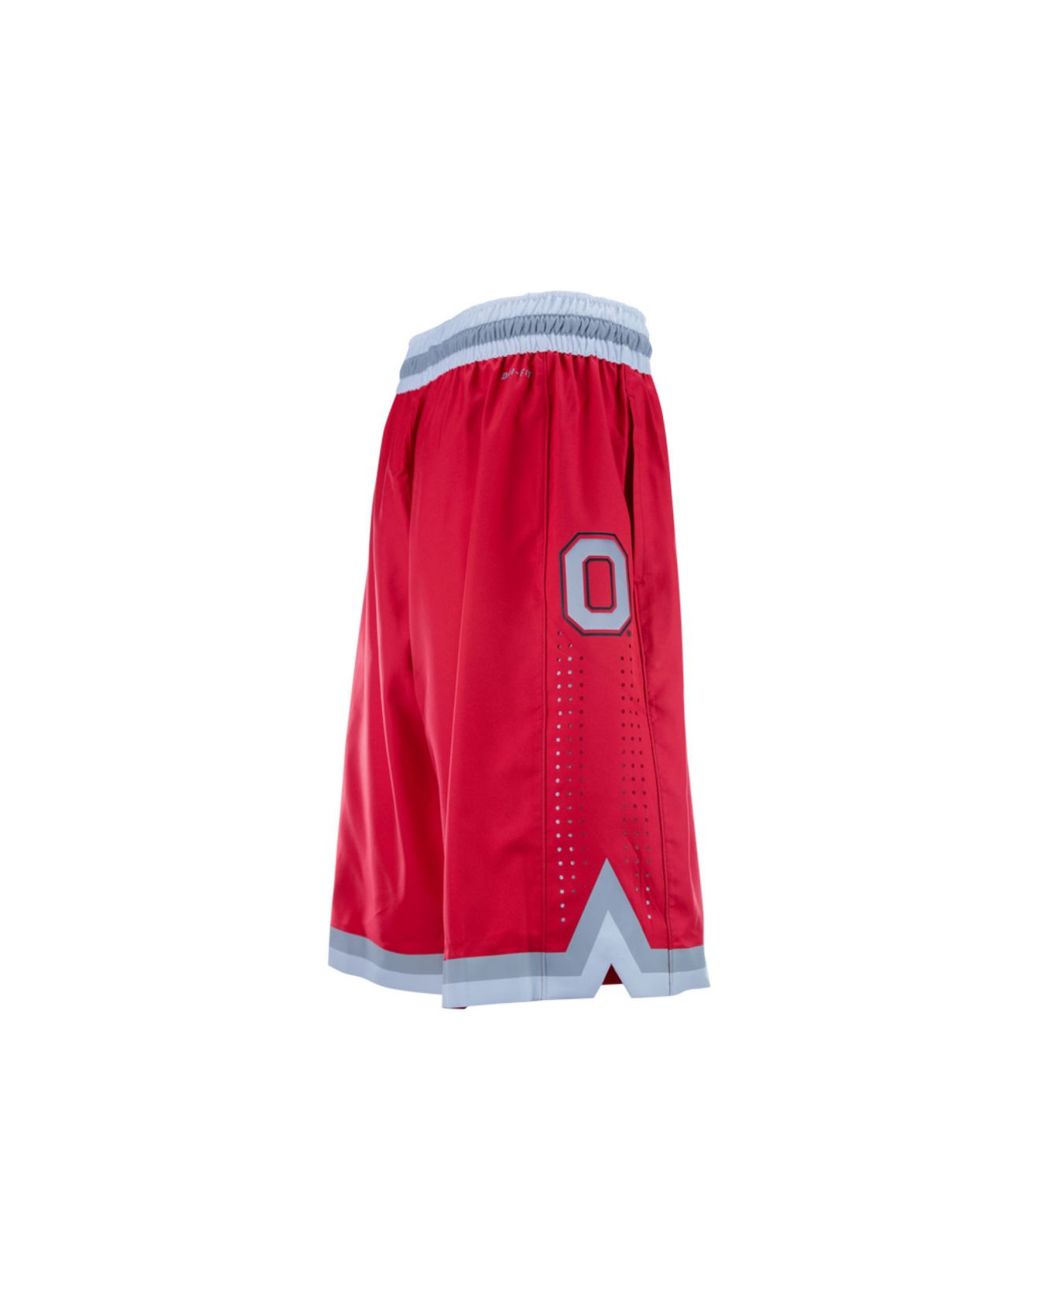 Men's Nike Scarlet Ohio State Buckeyes Retro Replica Basketball Jersey